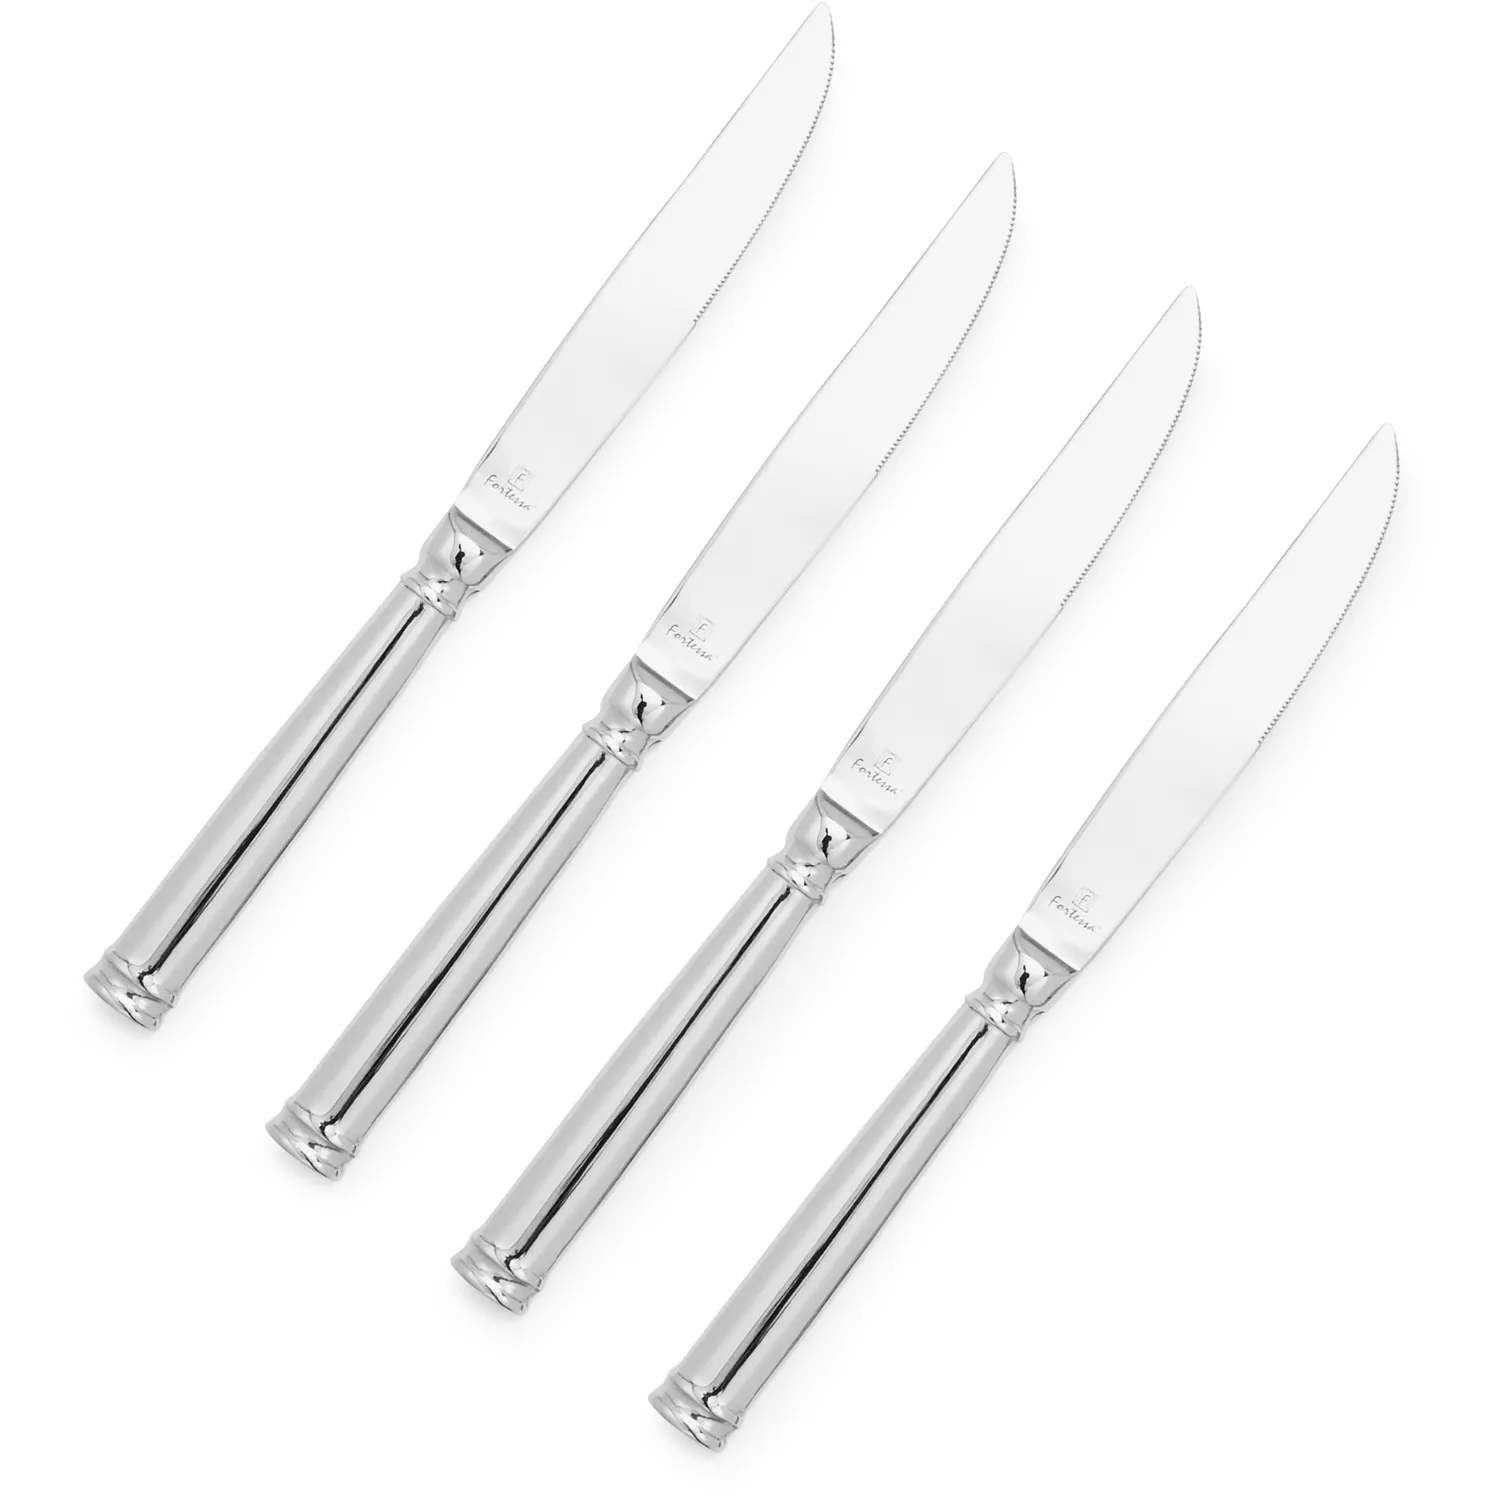 BergHOFF Bistro 6 Stainless Steel Steak Knife, Set of 6